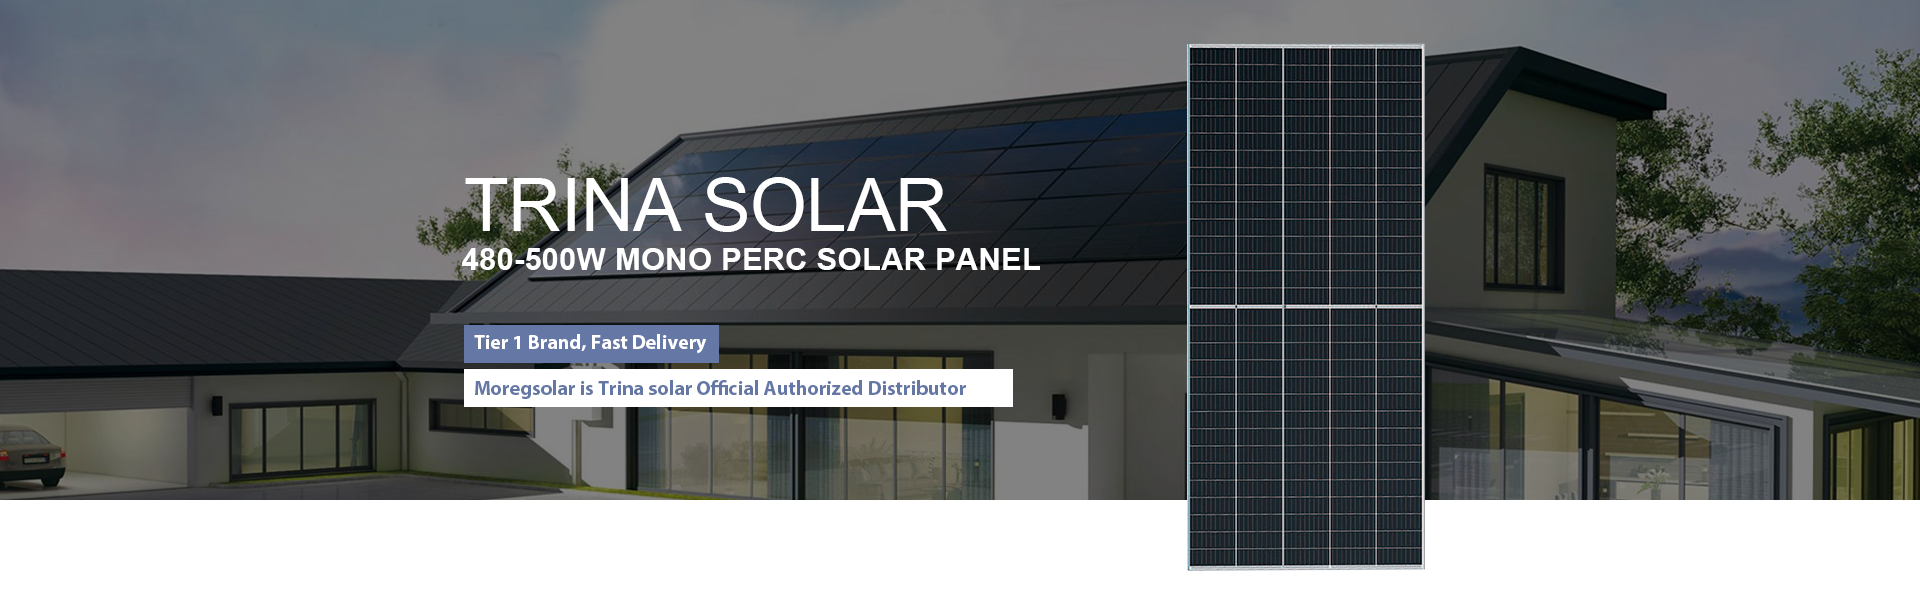 Trina solar vertex solar panel 500w home solar energy system